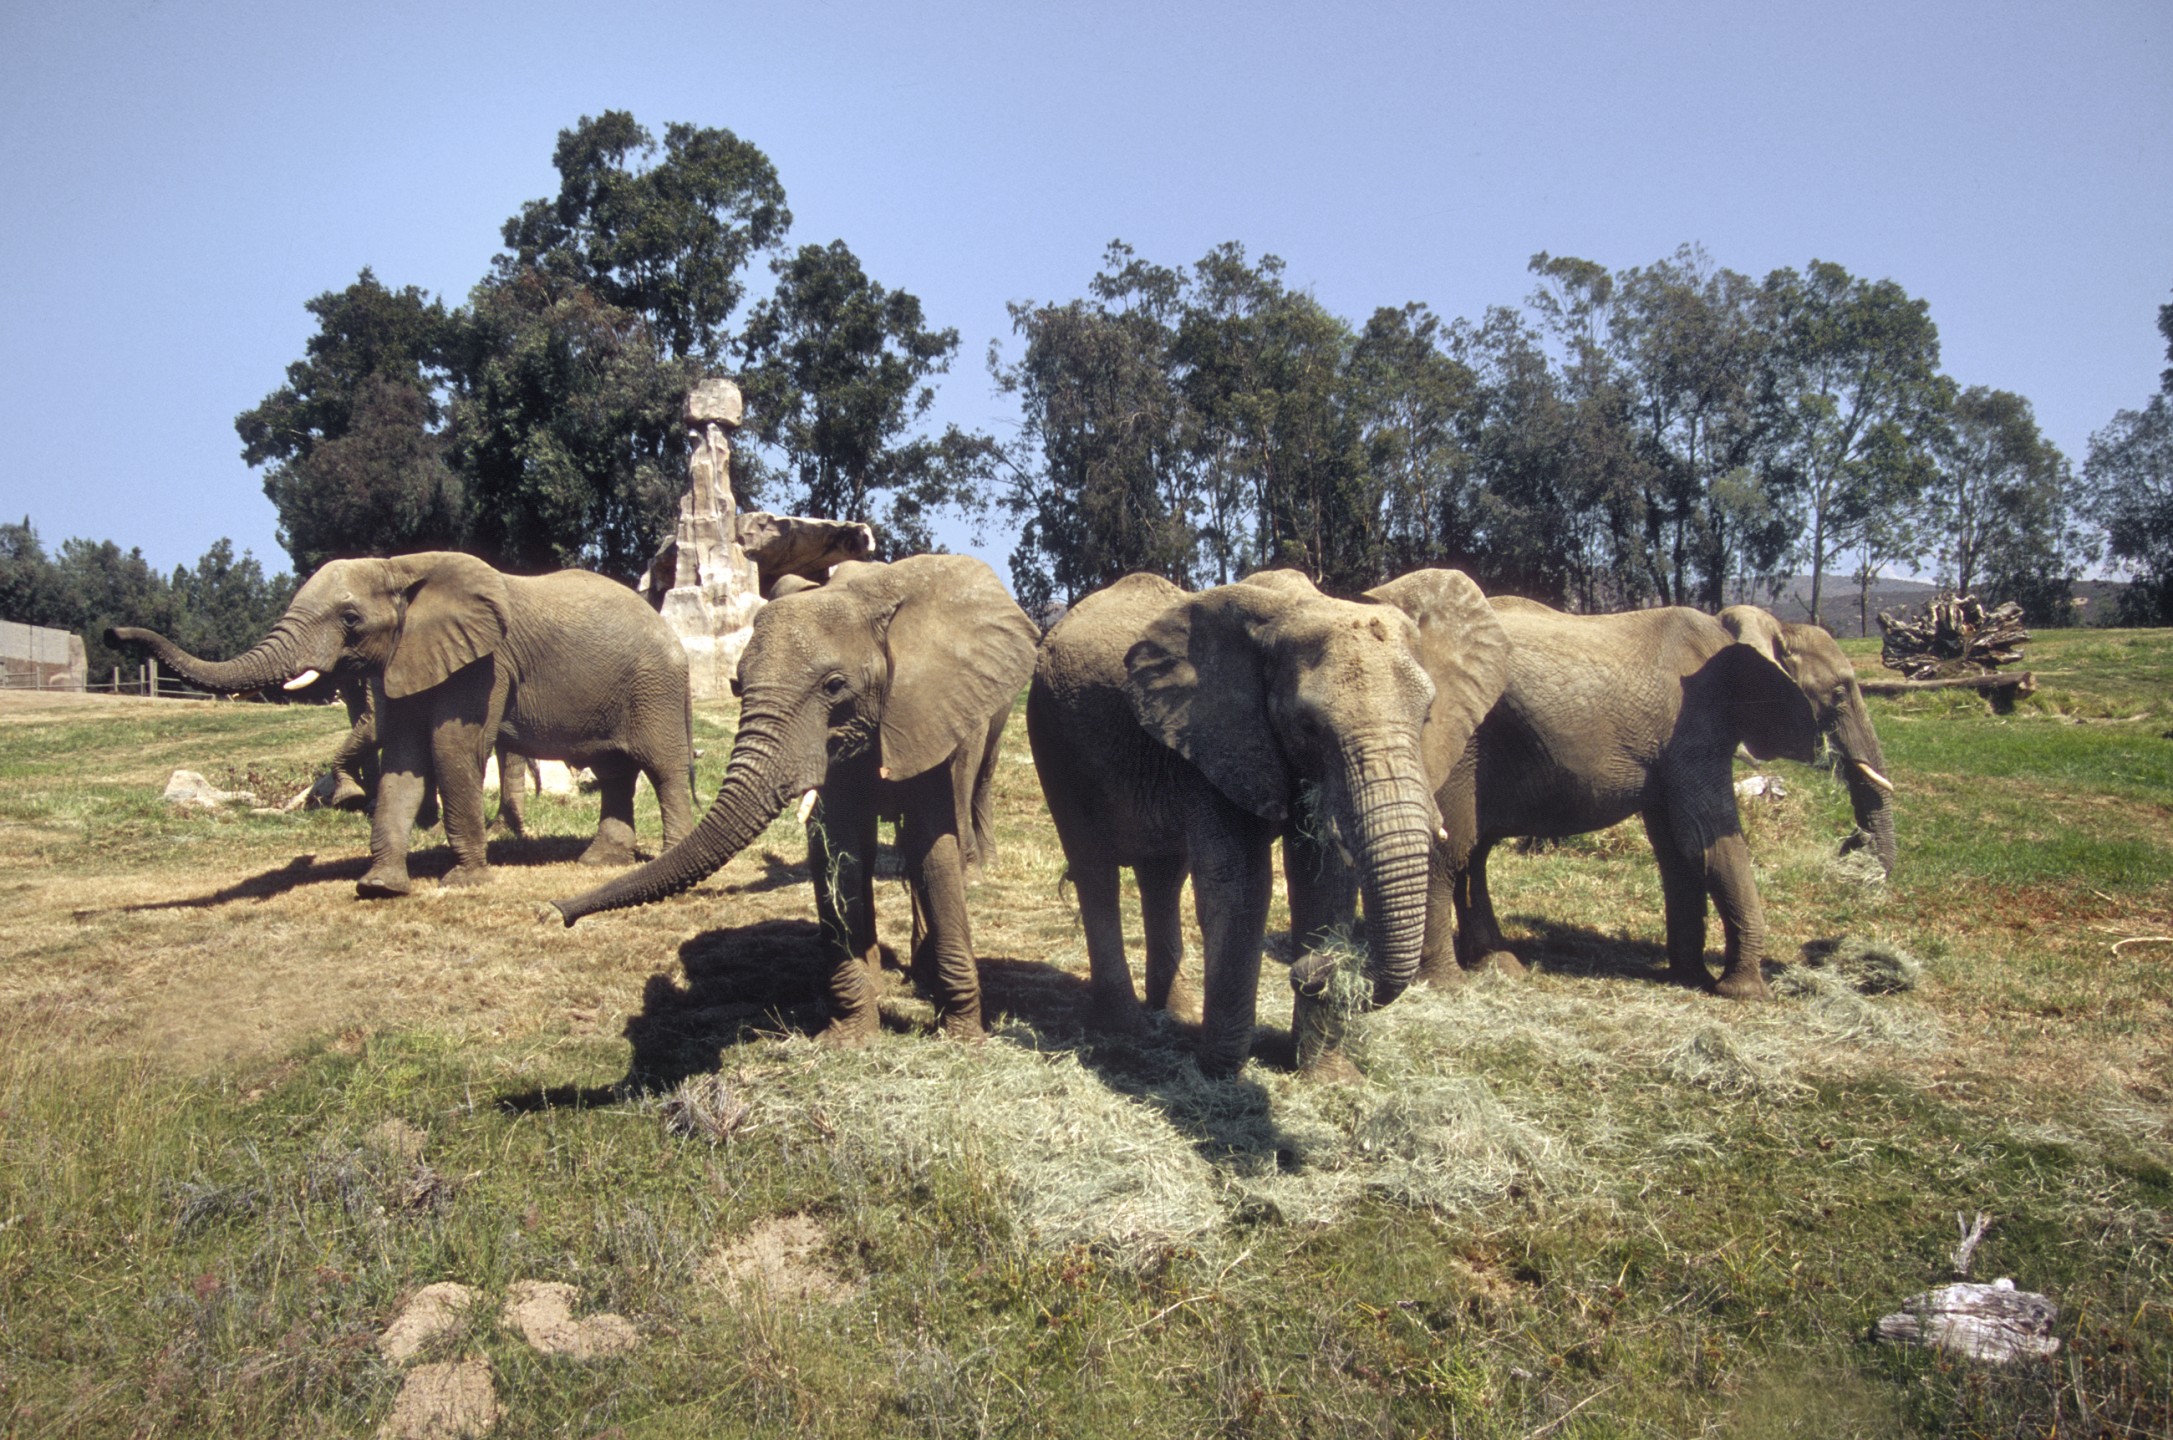 Swaziland elephants at the Wild Animal Park